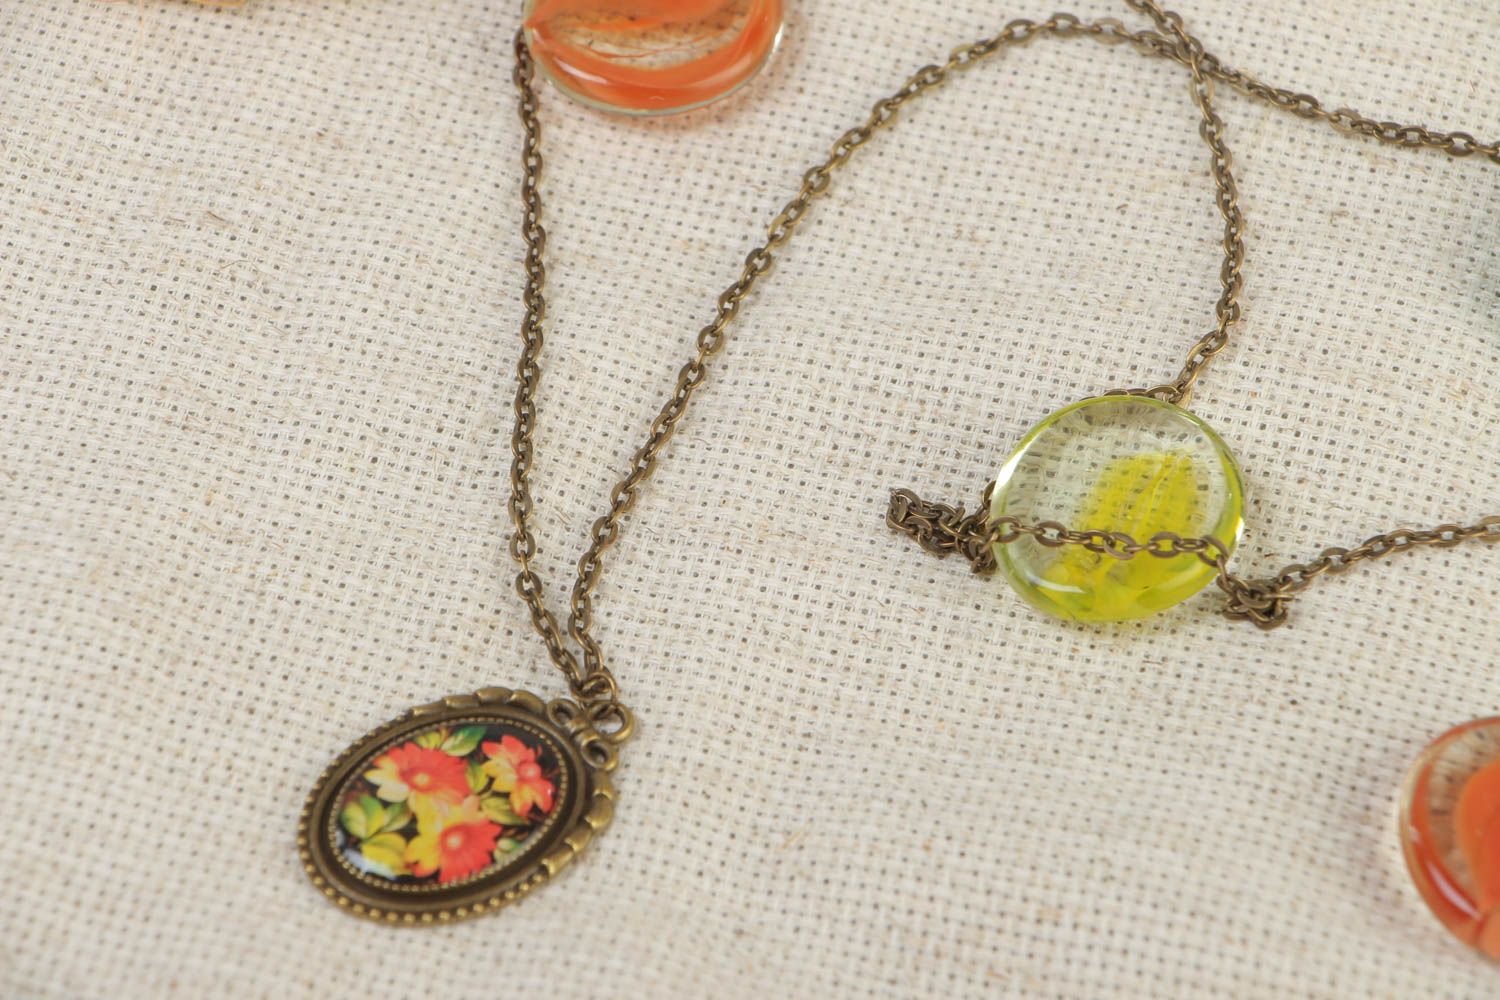 Handmade oval pendant with glass glaze and metal basis on long chain Flowers photo 1